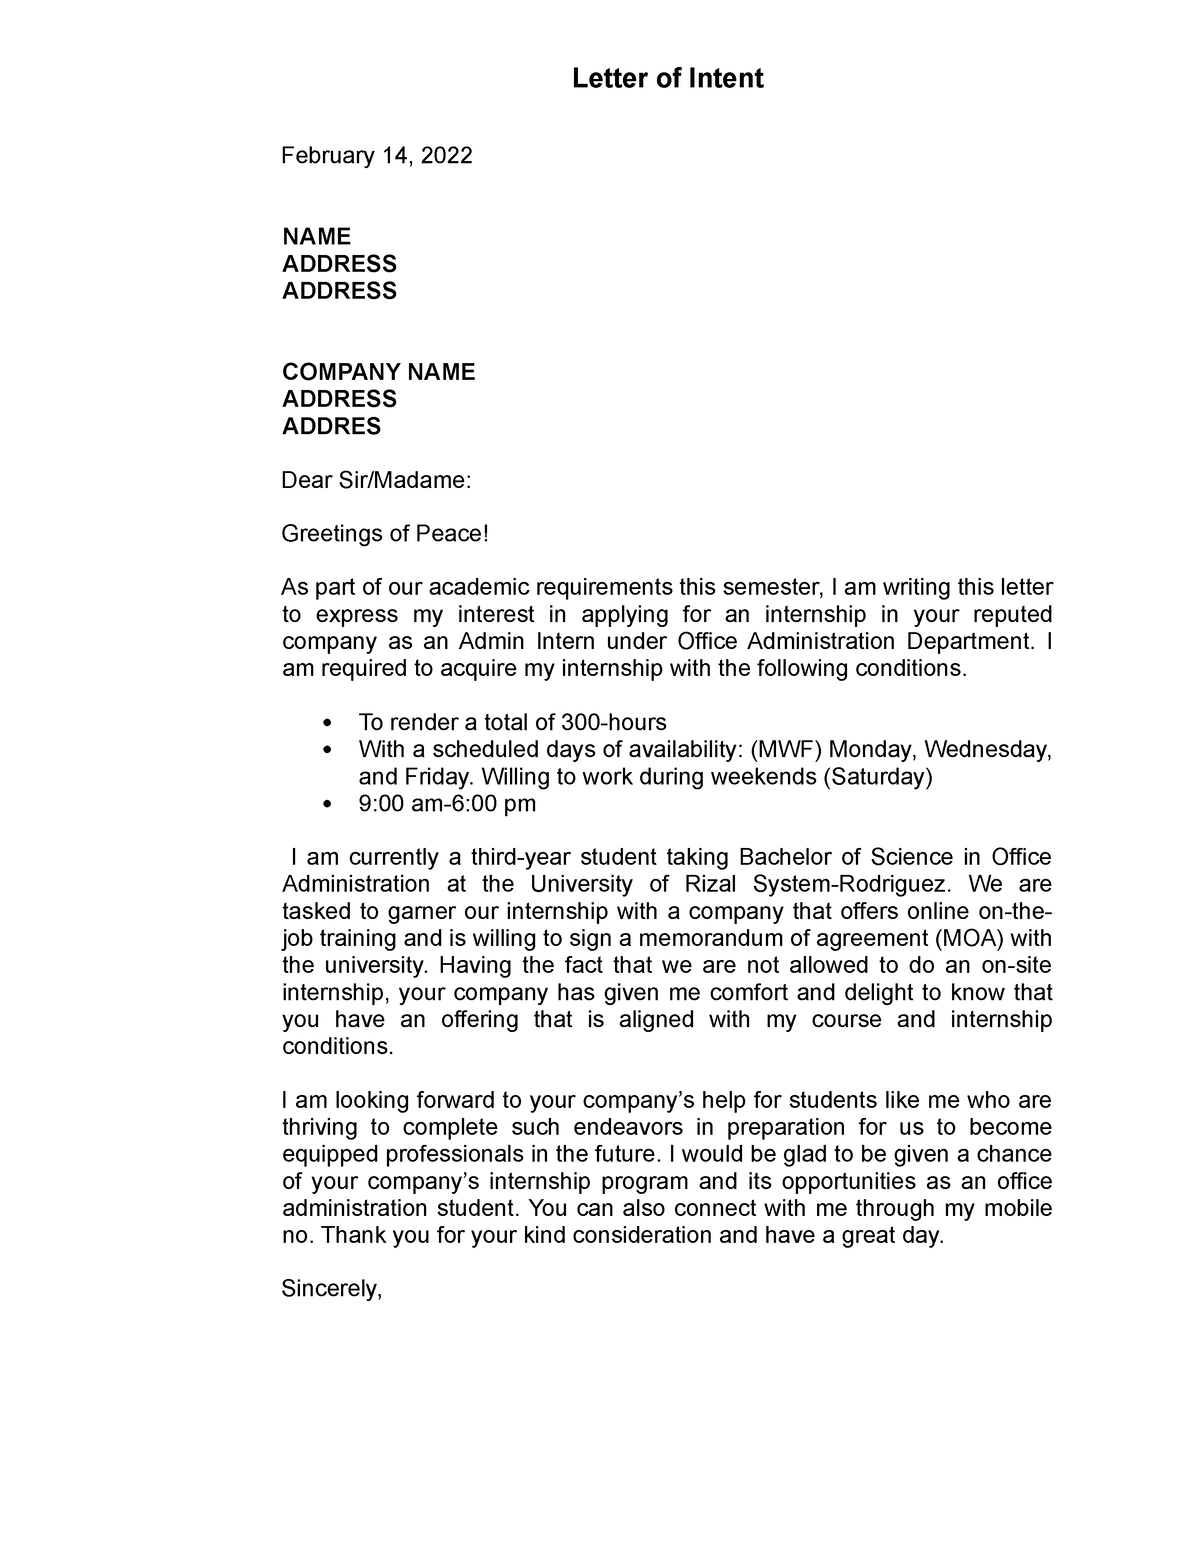 Letter of Intent for Internship Letter of Intent February 14, 2022